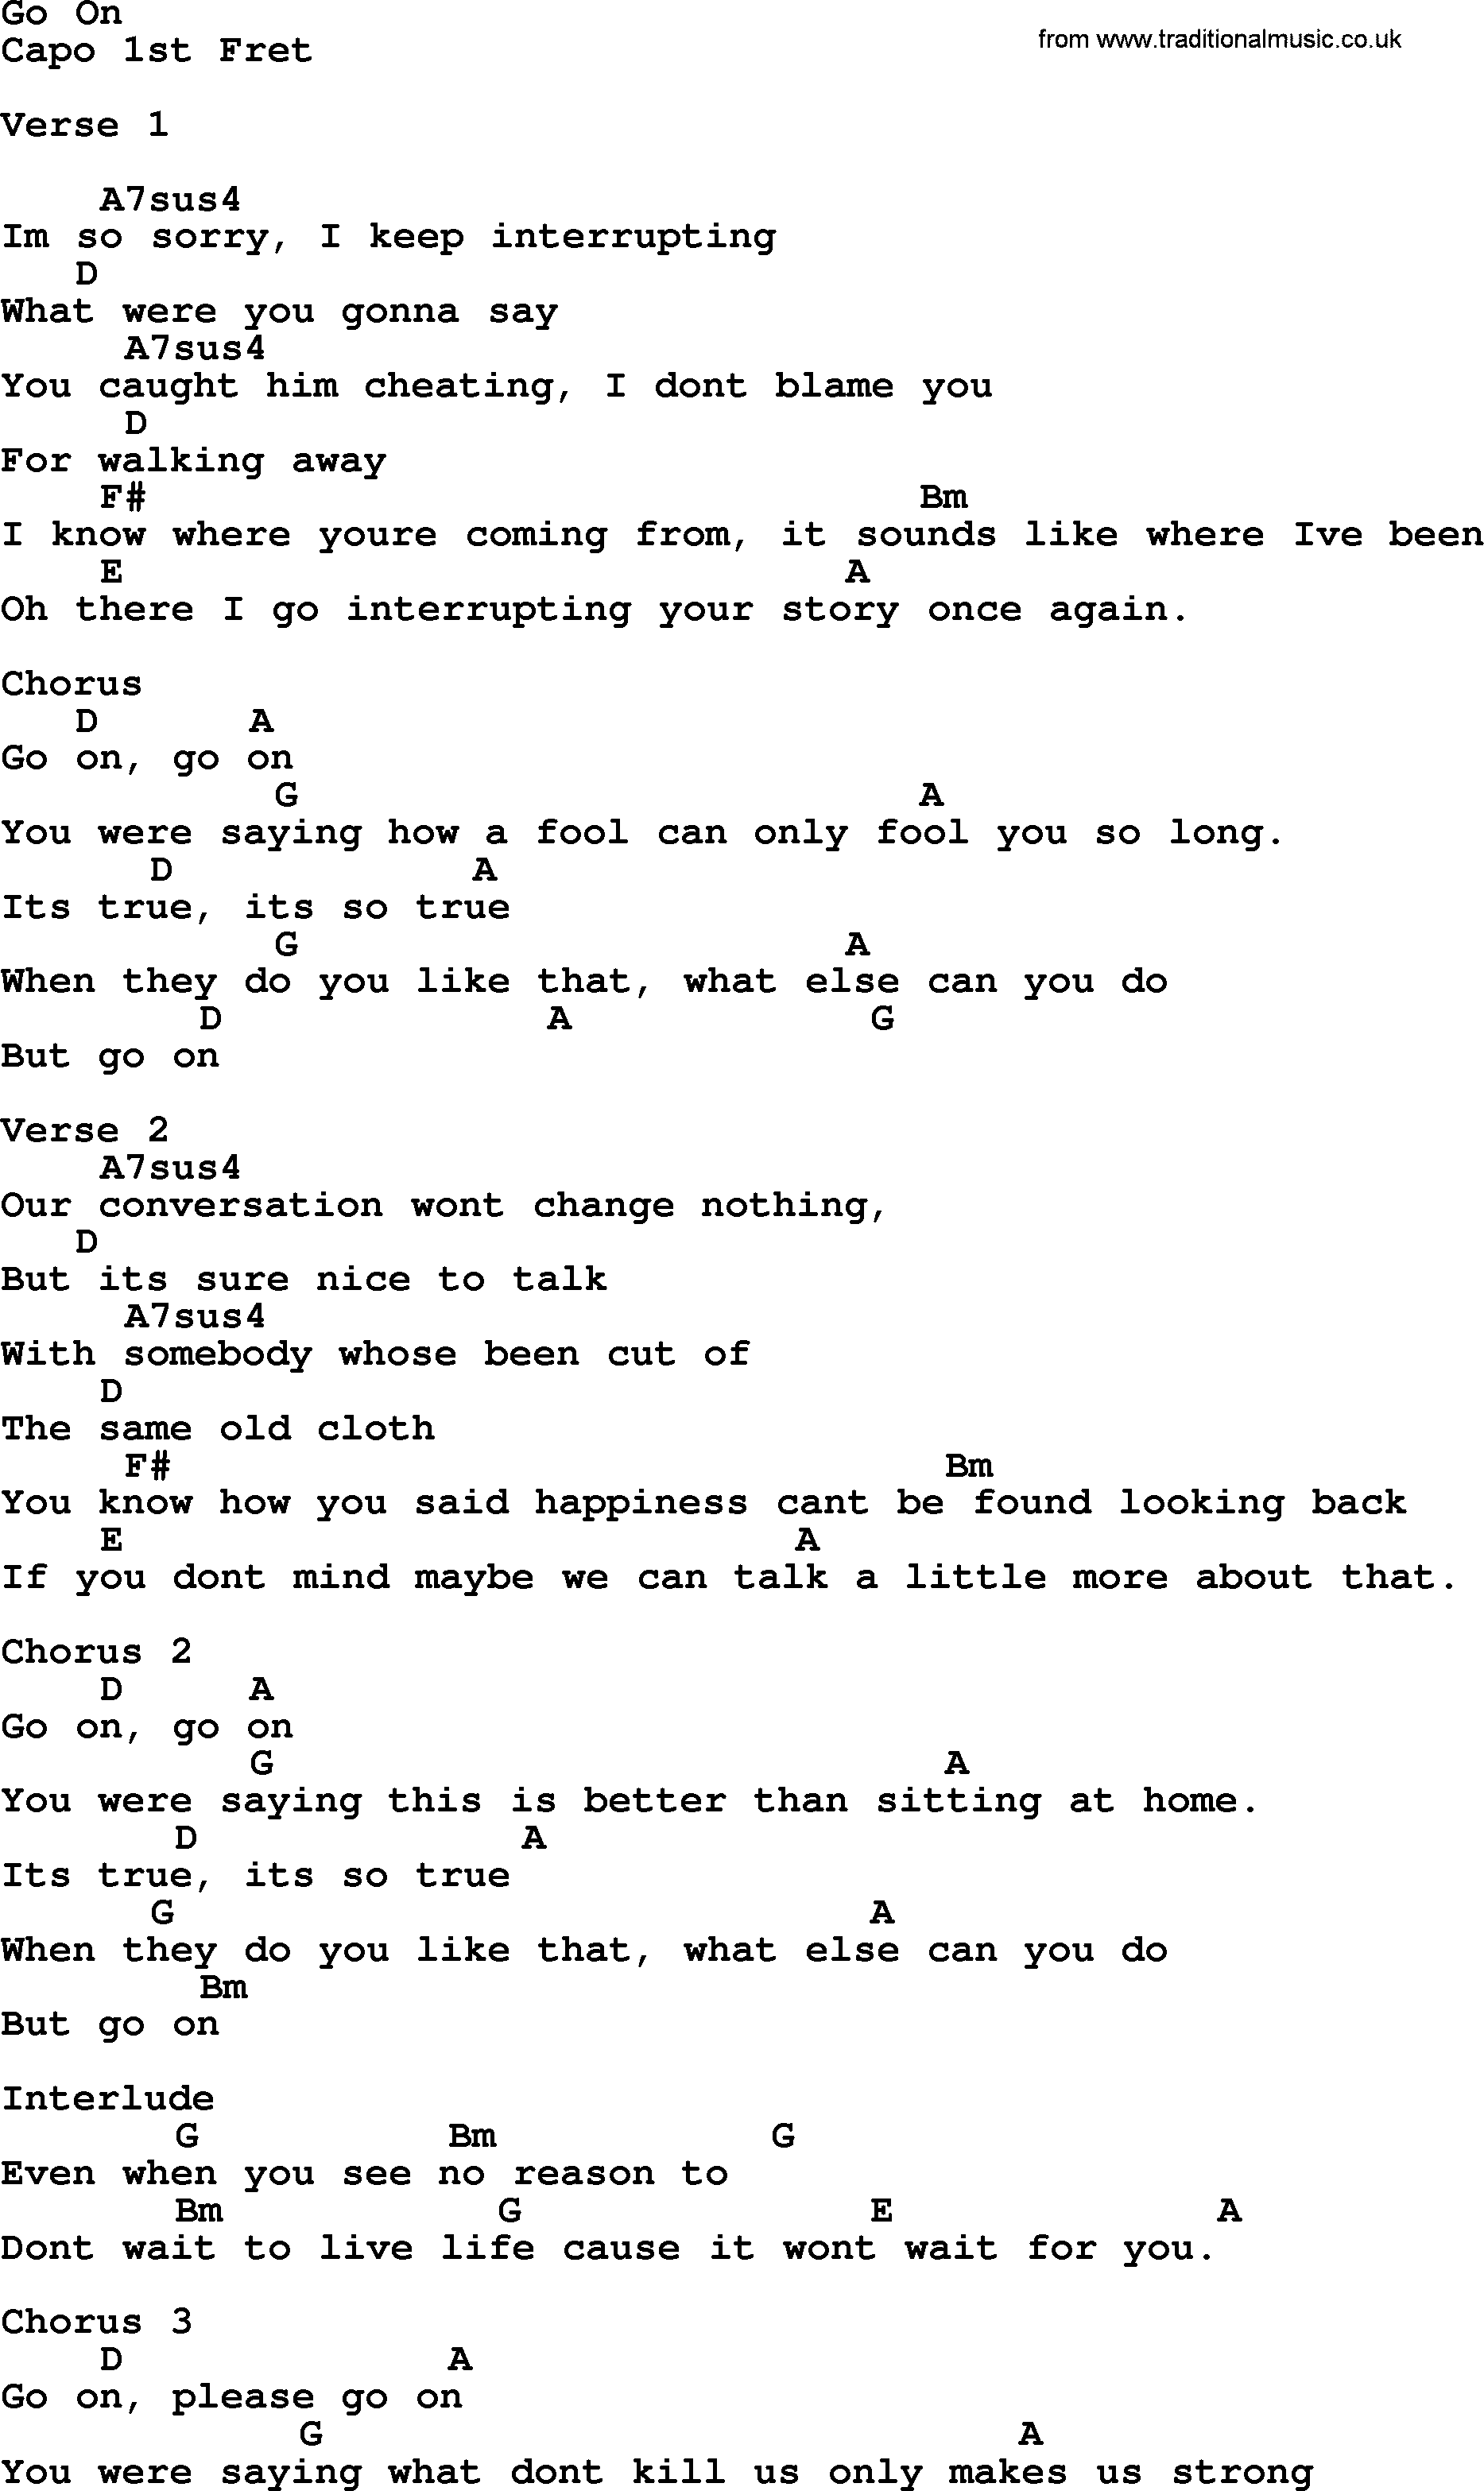 George Strait song: Go On, lyrics and chords